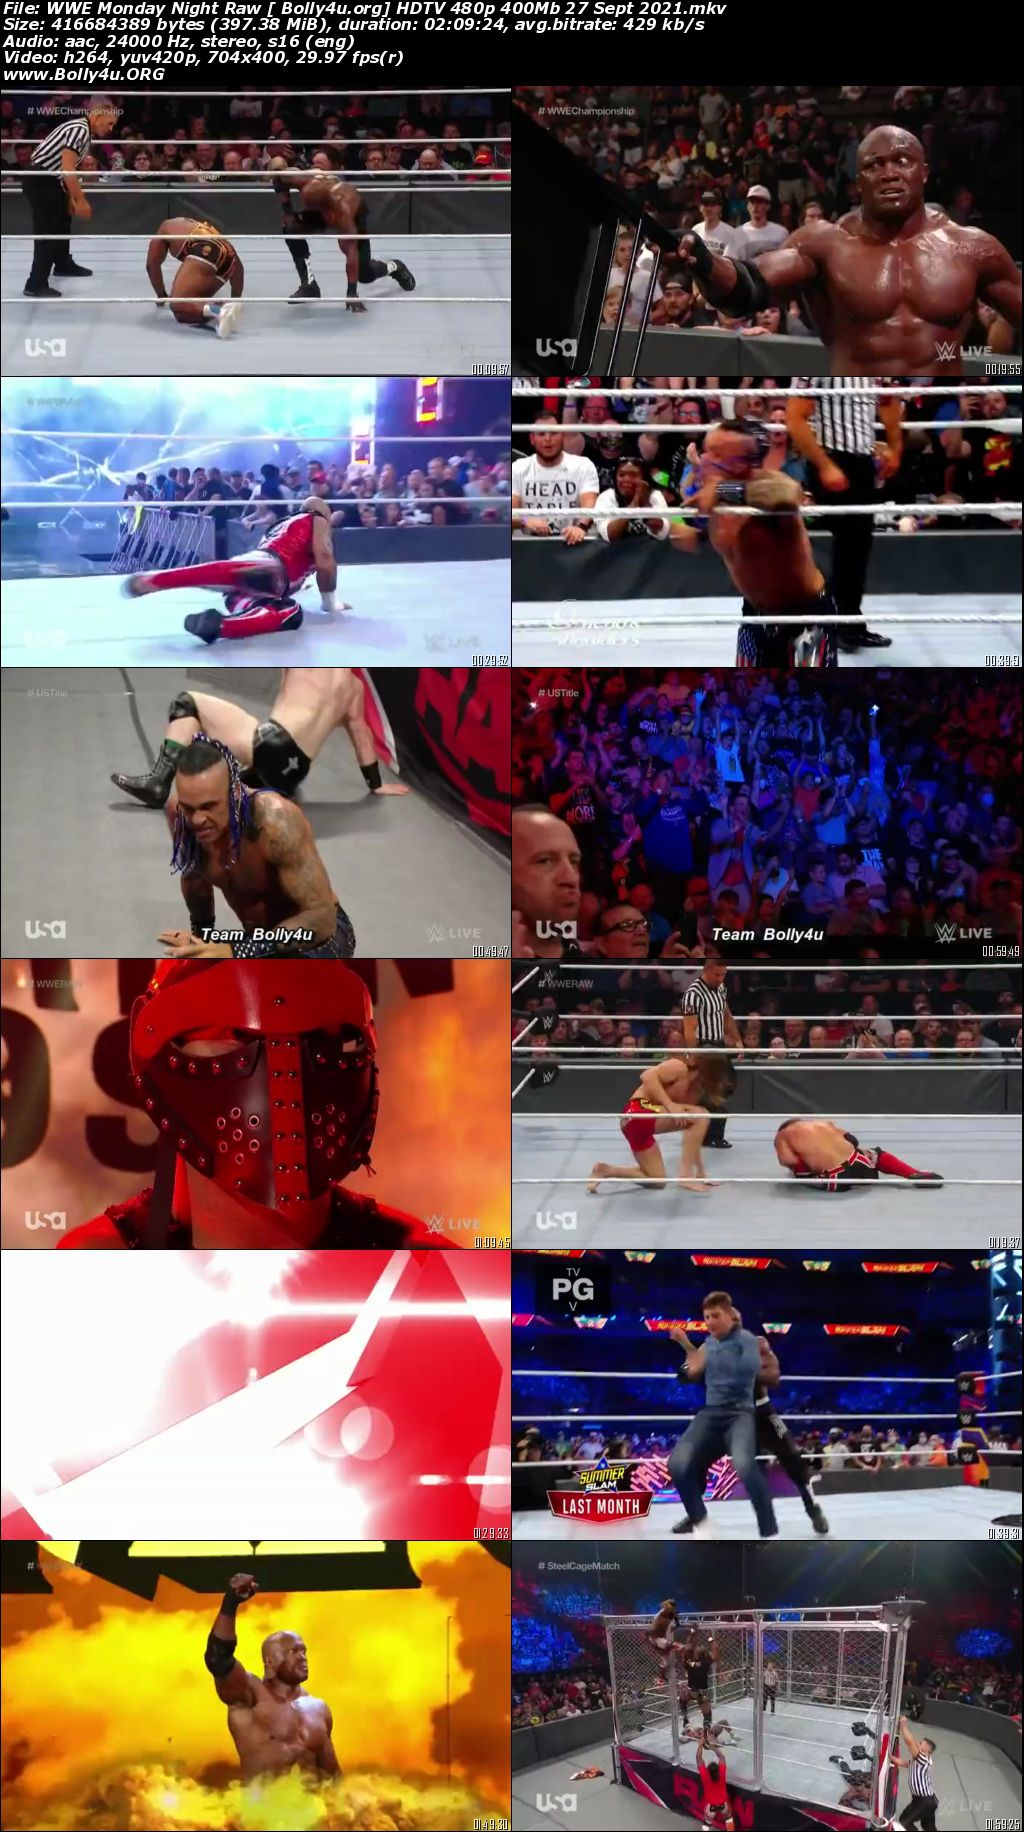 WWE Monday Night Raw HDTV 480p 400Mb 27 Sept 2021 Download